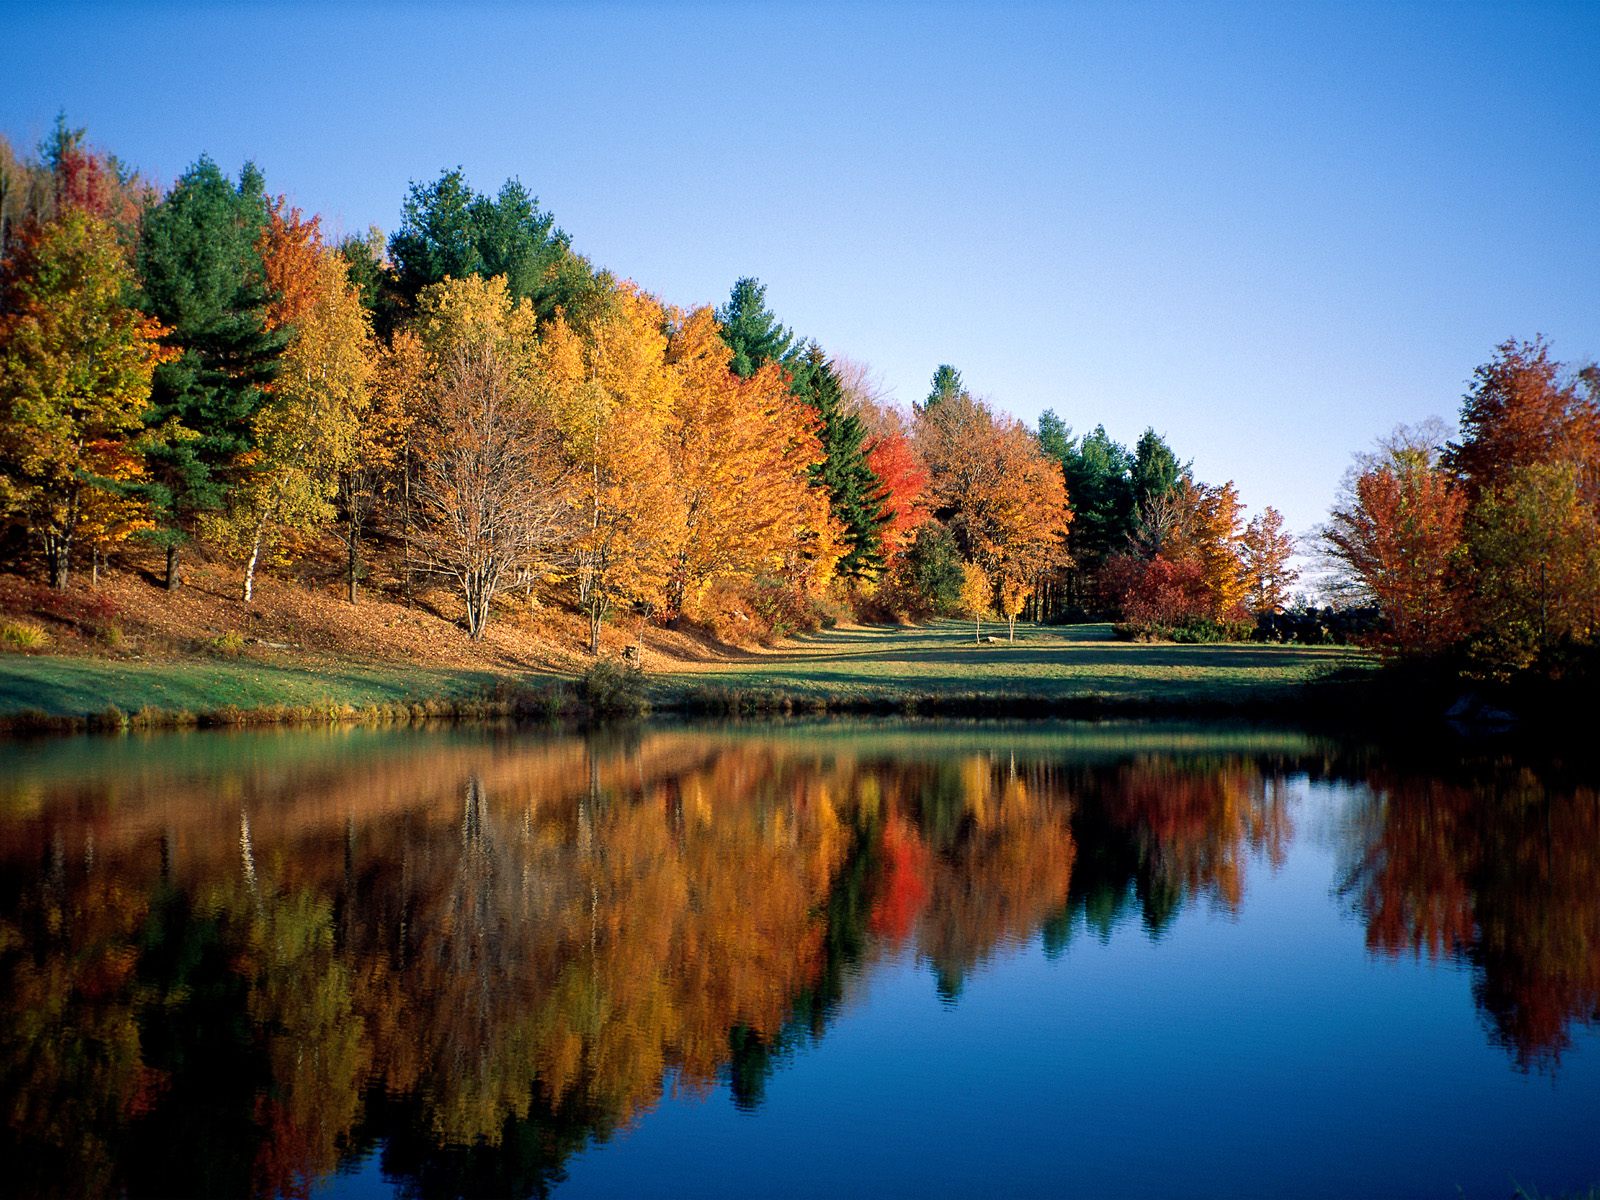 Autumn Reflections Vermont - nature wallpaper featuring autumn image